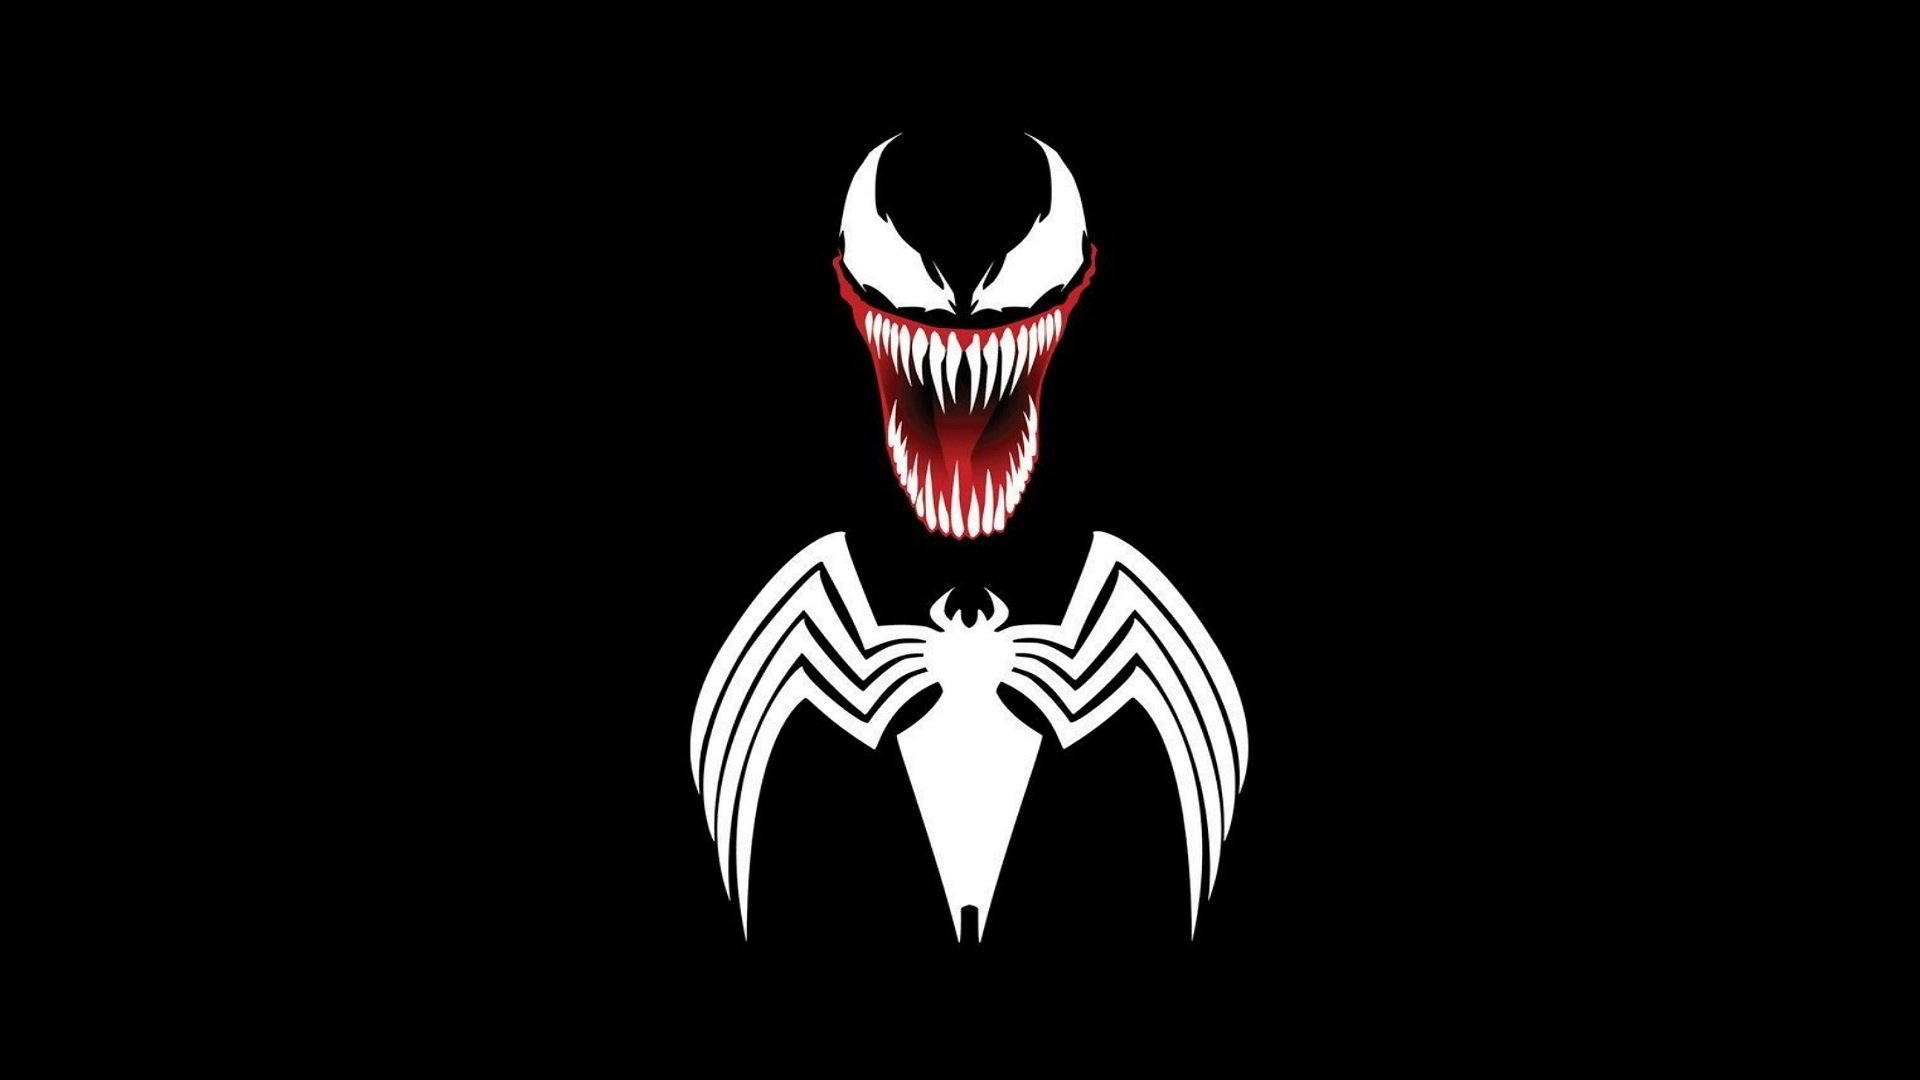 1920x1080 Venom Wallpaper Background Image. 